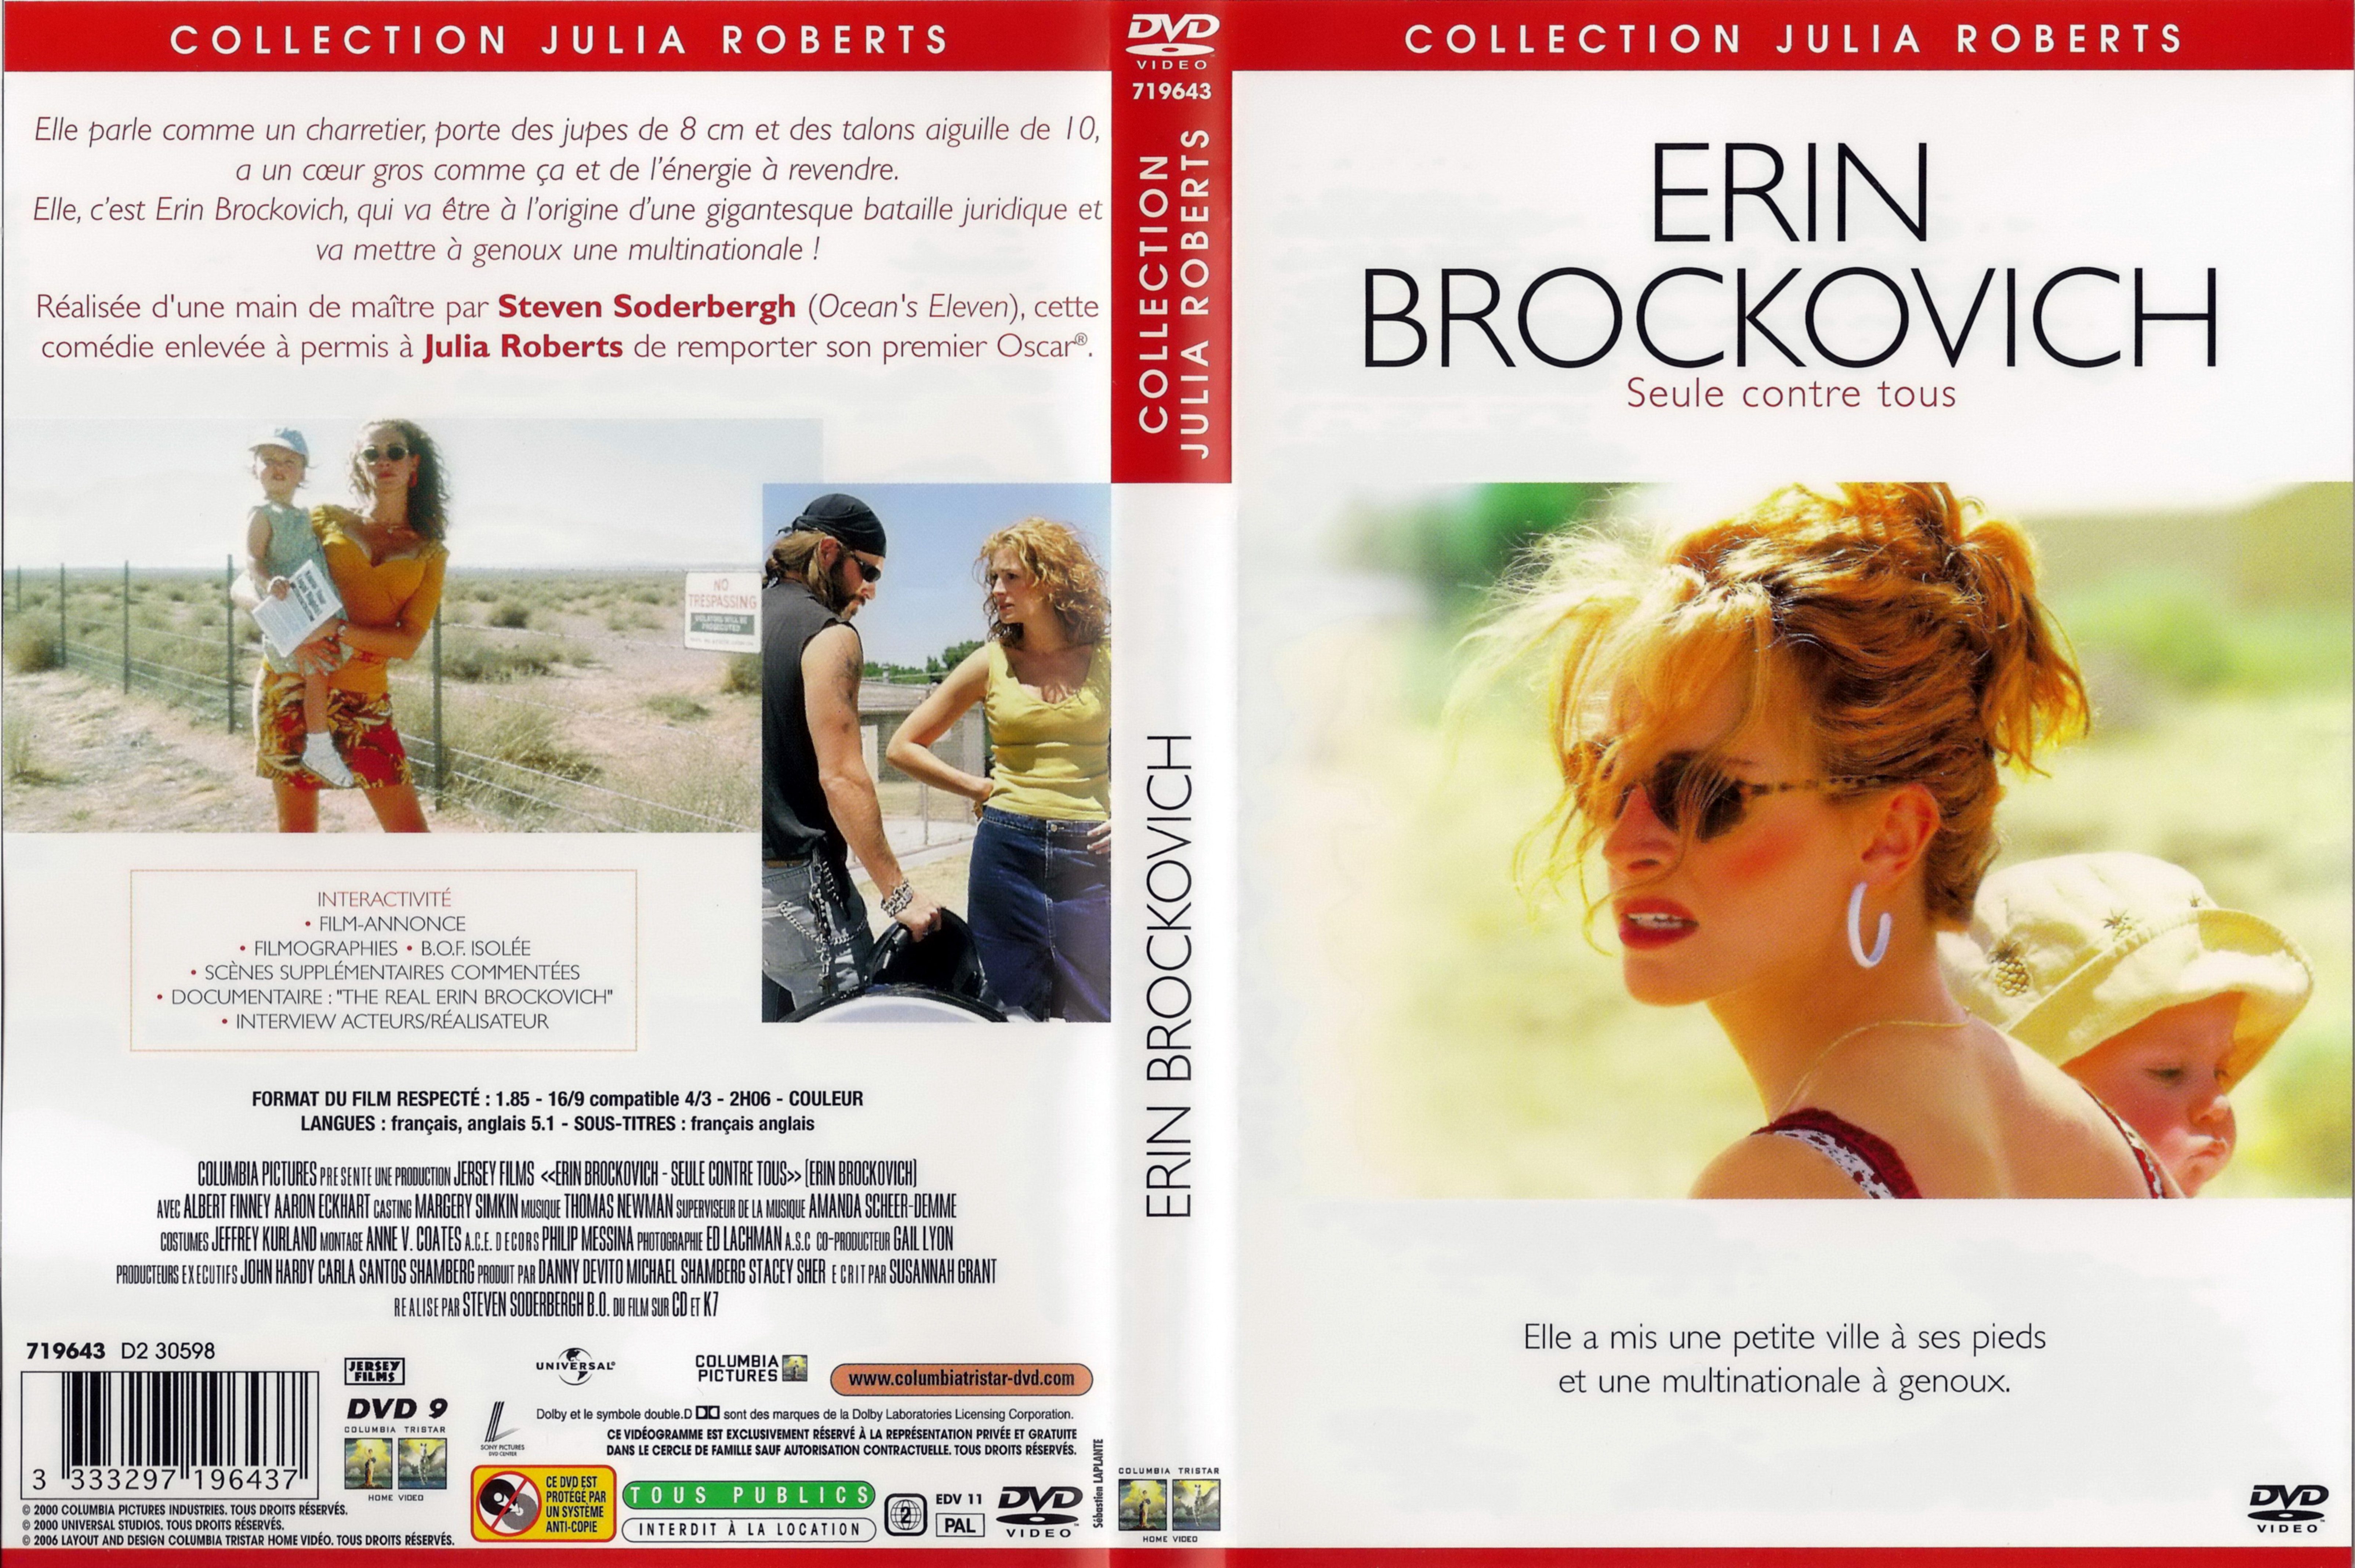 Jaquette DVD Erin Brockovich v3